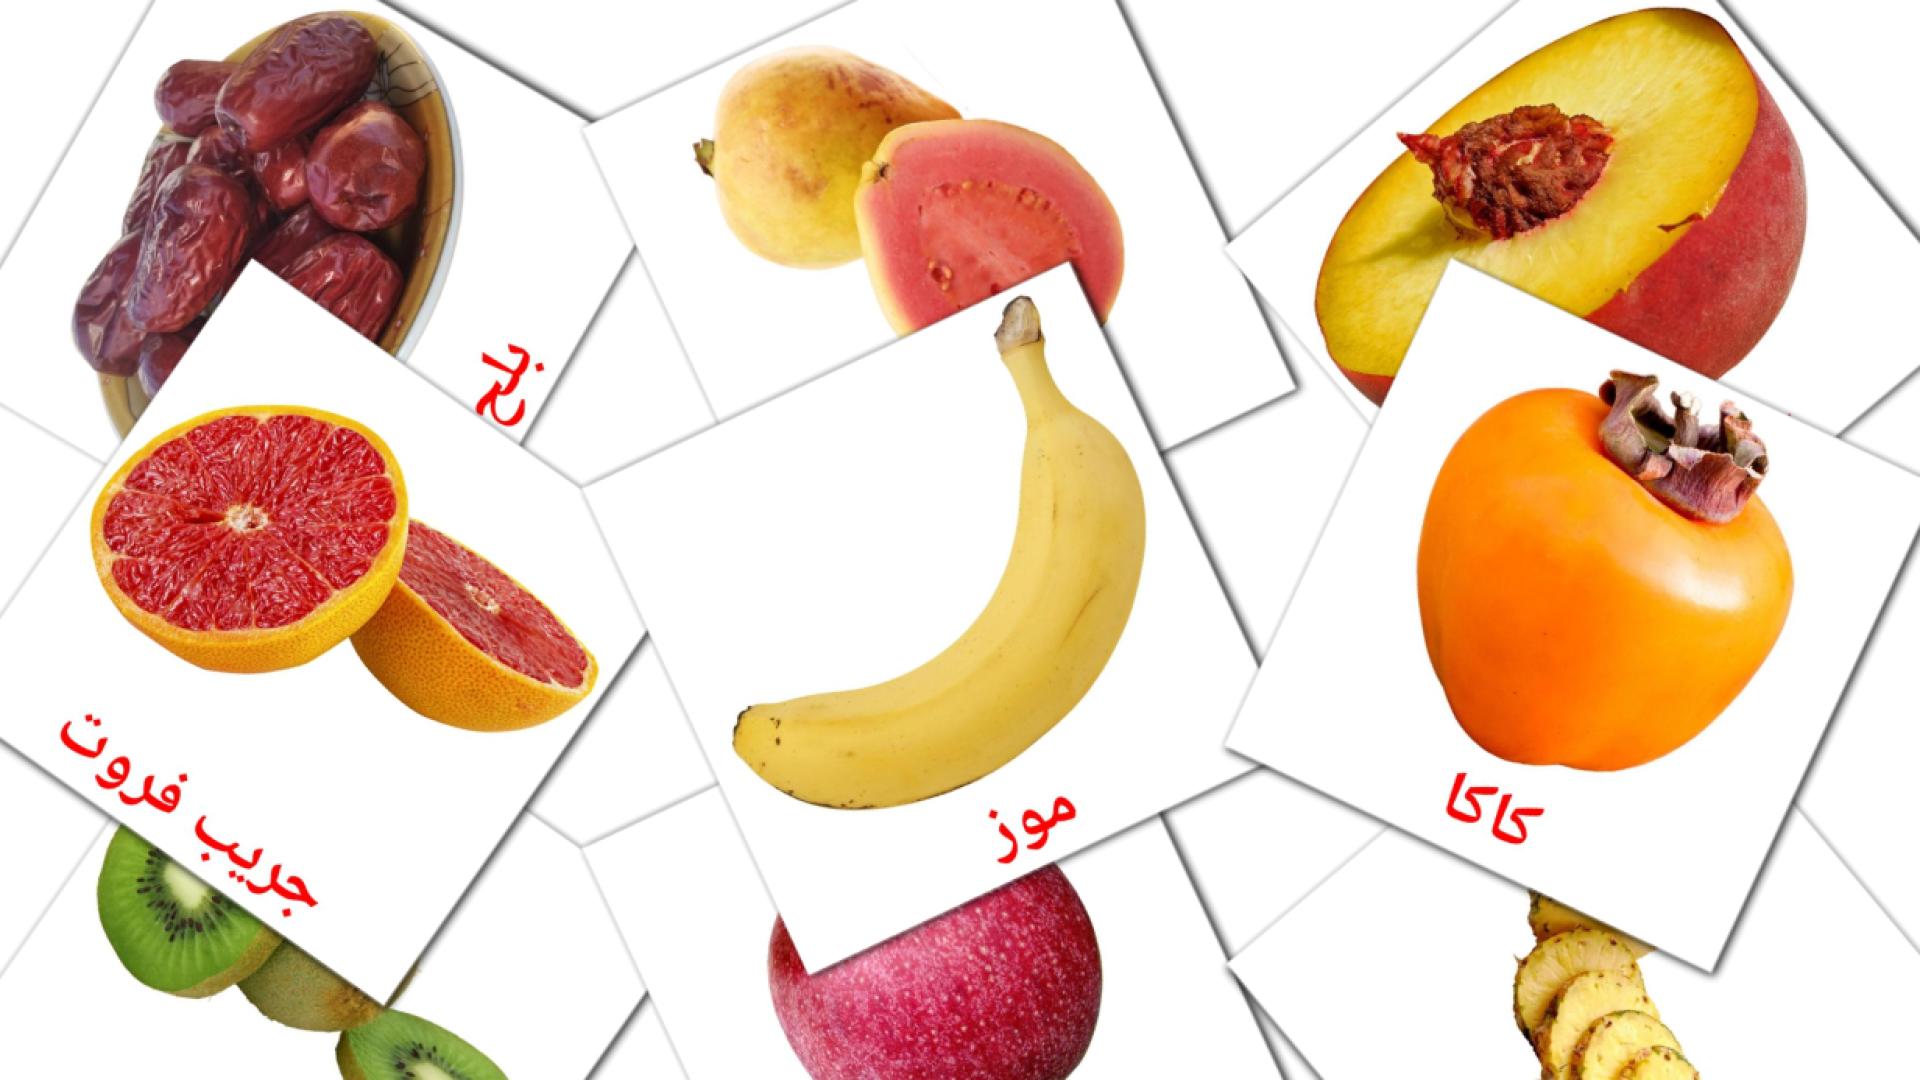 Fruits - arabic vocabulary cards